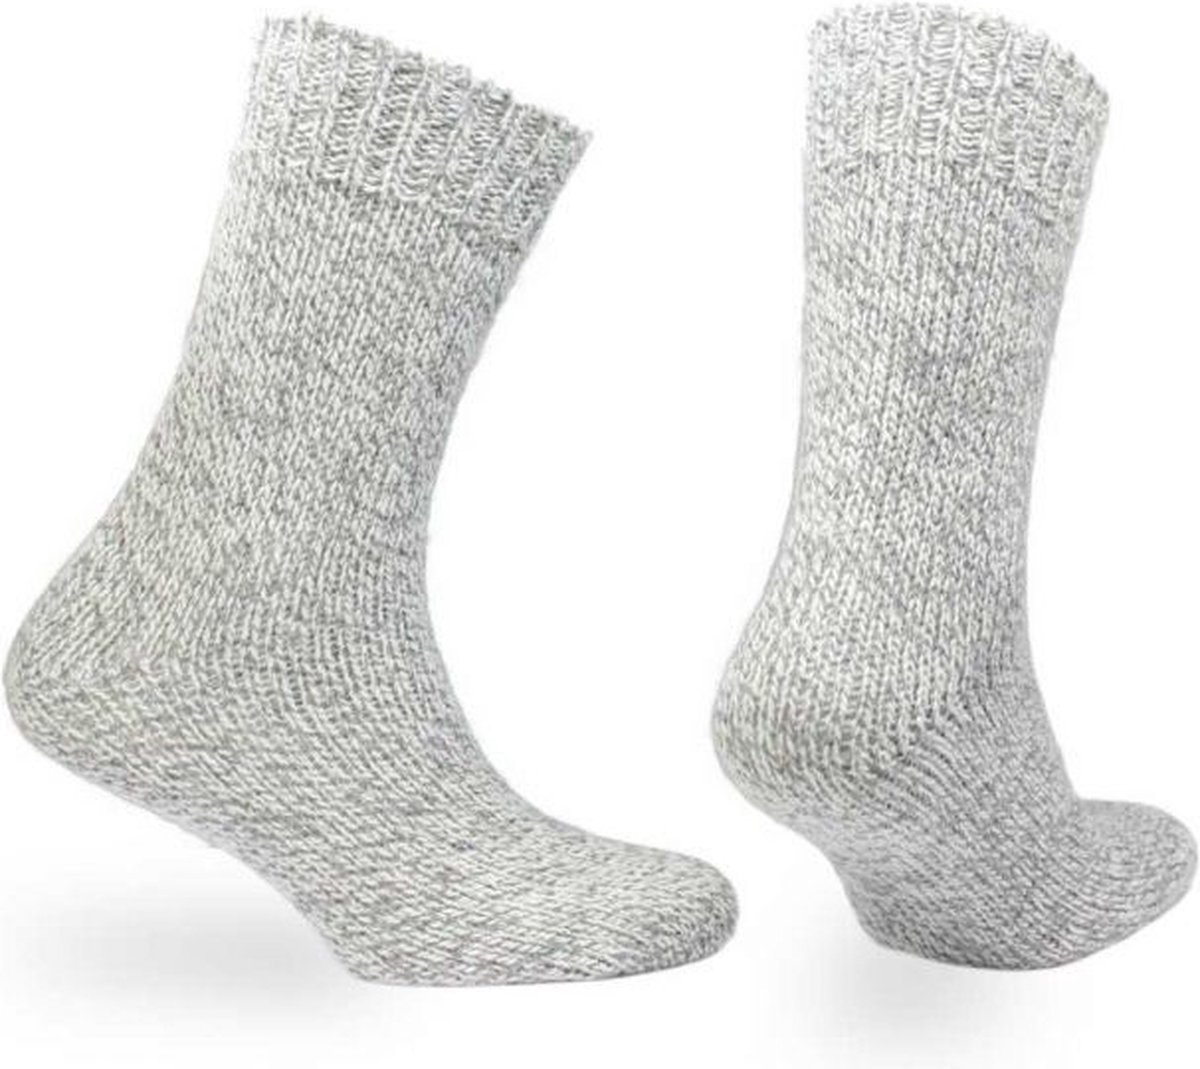 Norfolk - Noorse Klassieke Wollen Sokken - Dikke Zware Warme Sokken - 3 paar - Ragg - 43-46 - Grijs